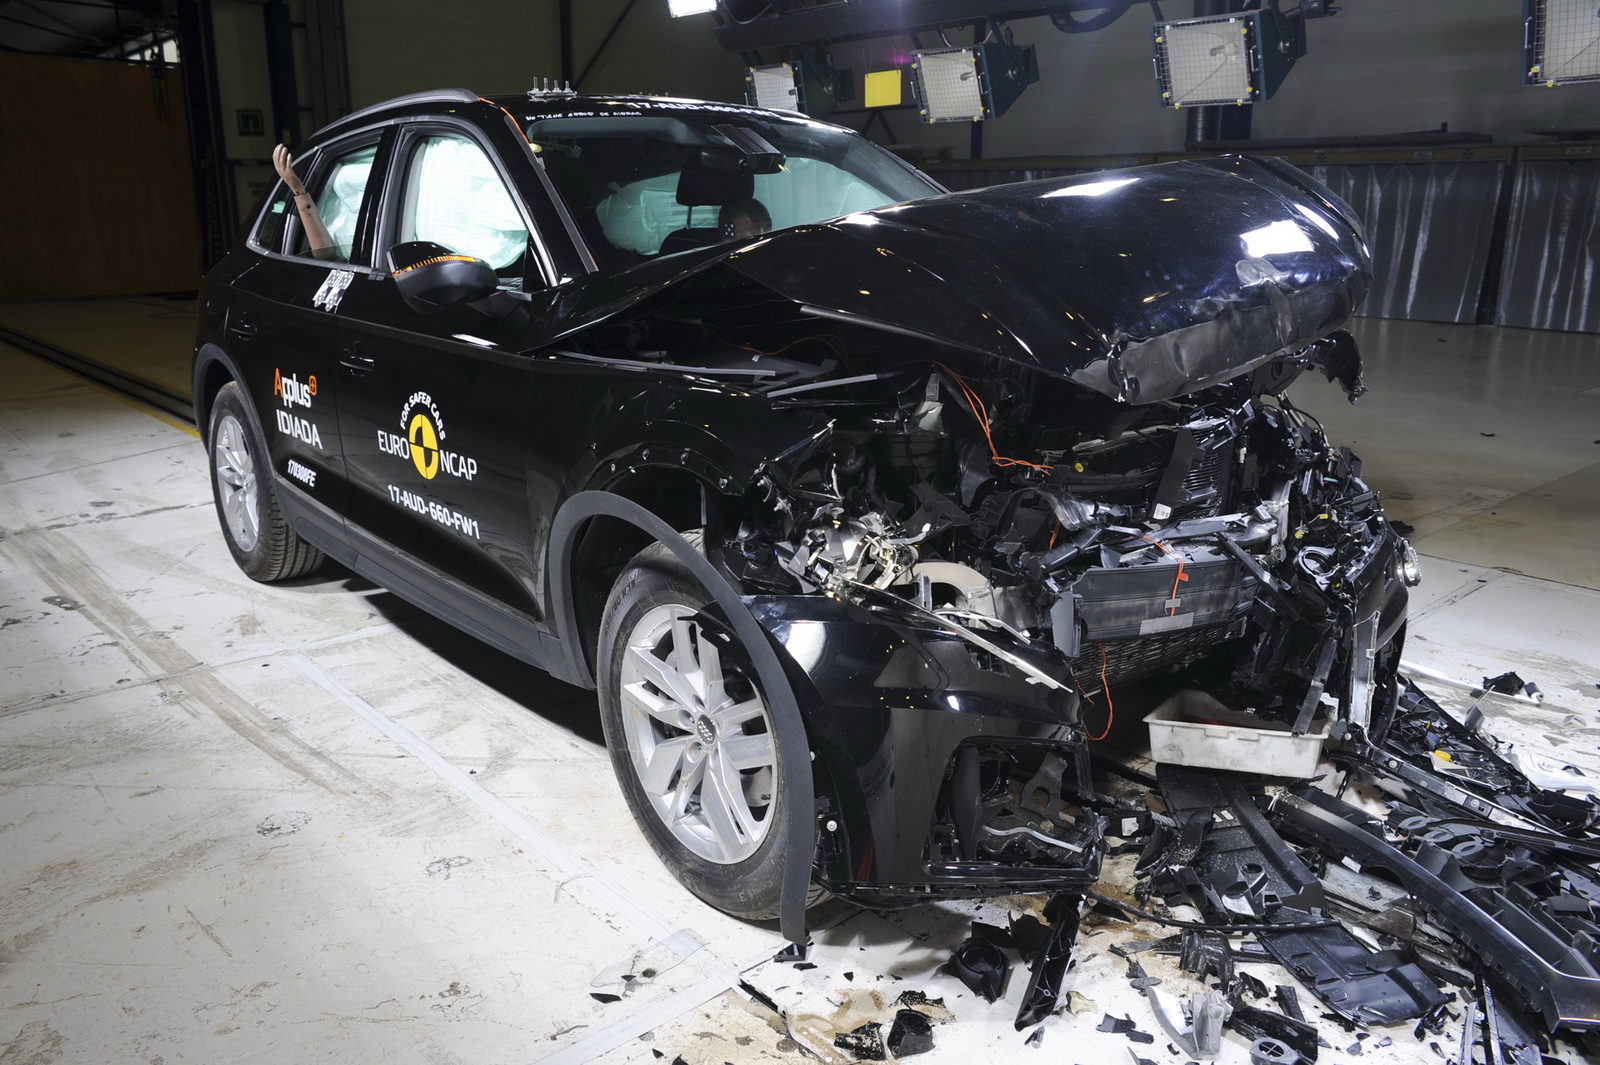 نتائج موسم اختبارات يورو NCAP لسلامة السيارات يكشف عنها 8